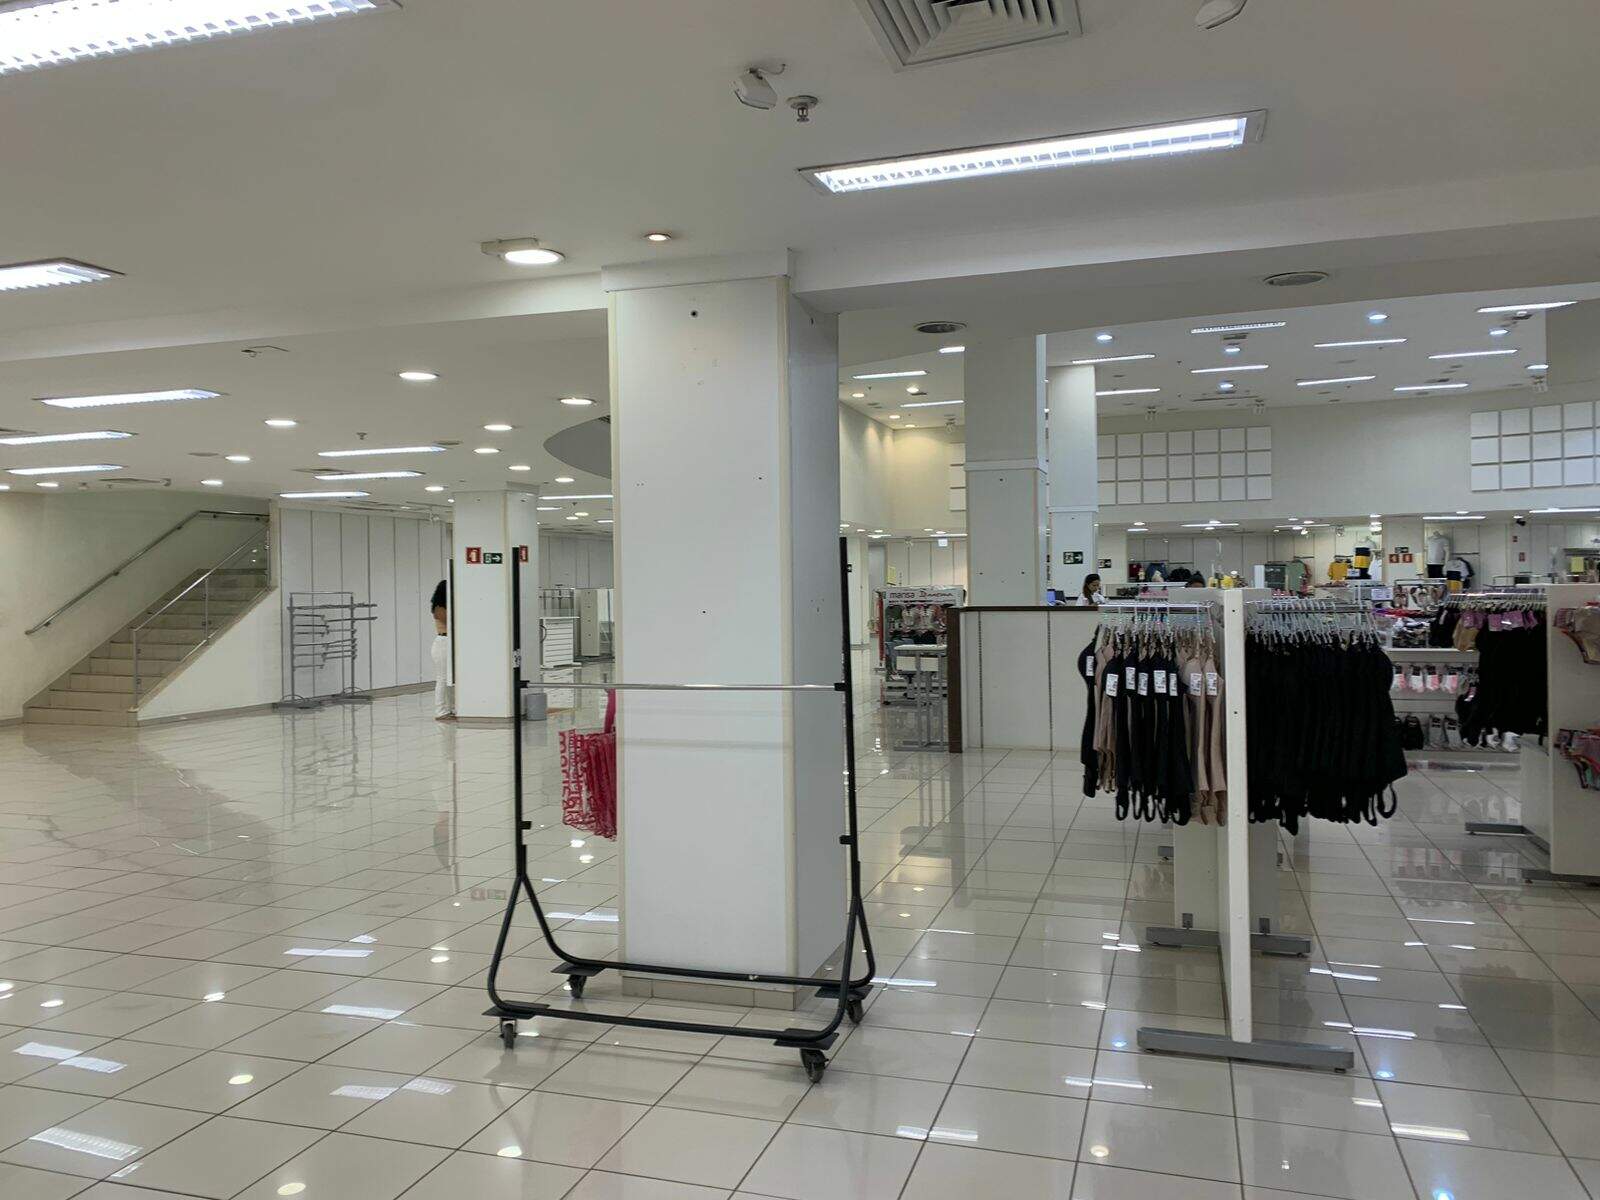 Loja Marisa do Shopping Campo Grande vai fechar no dia 31